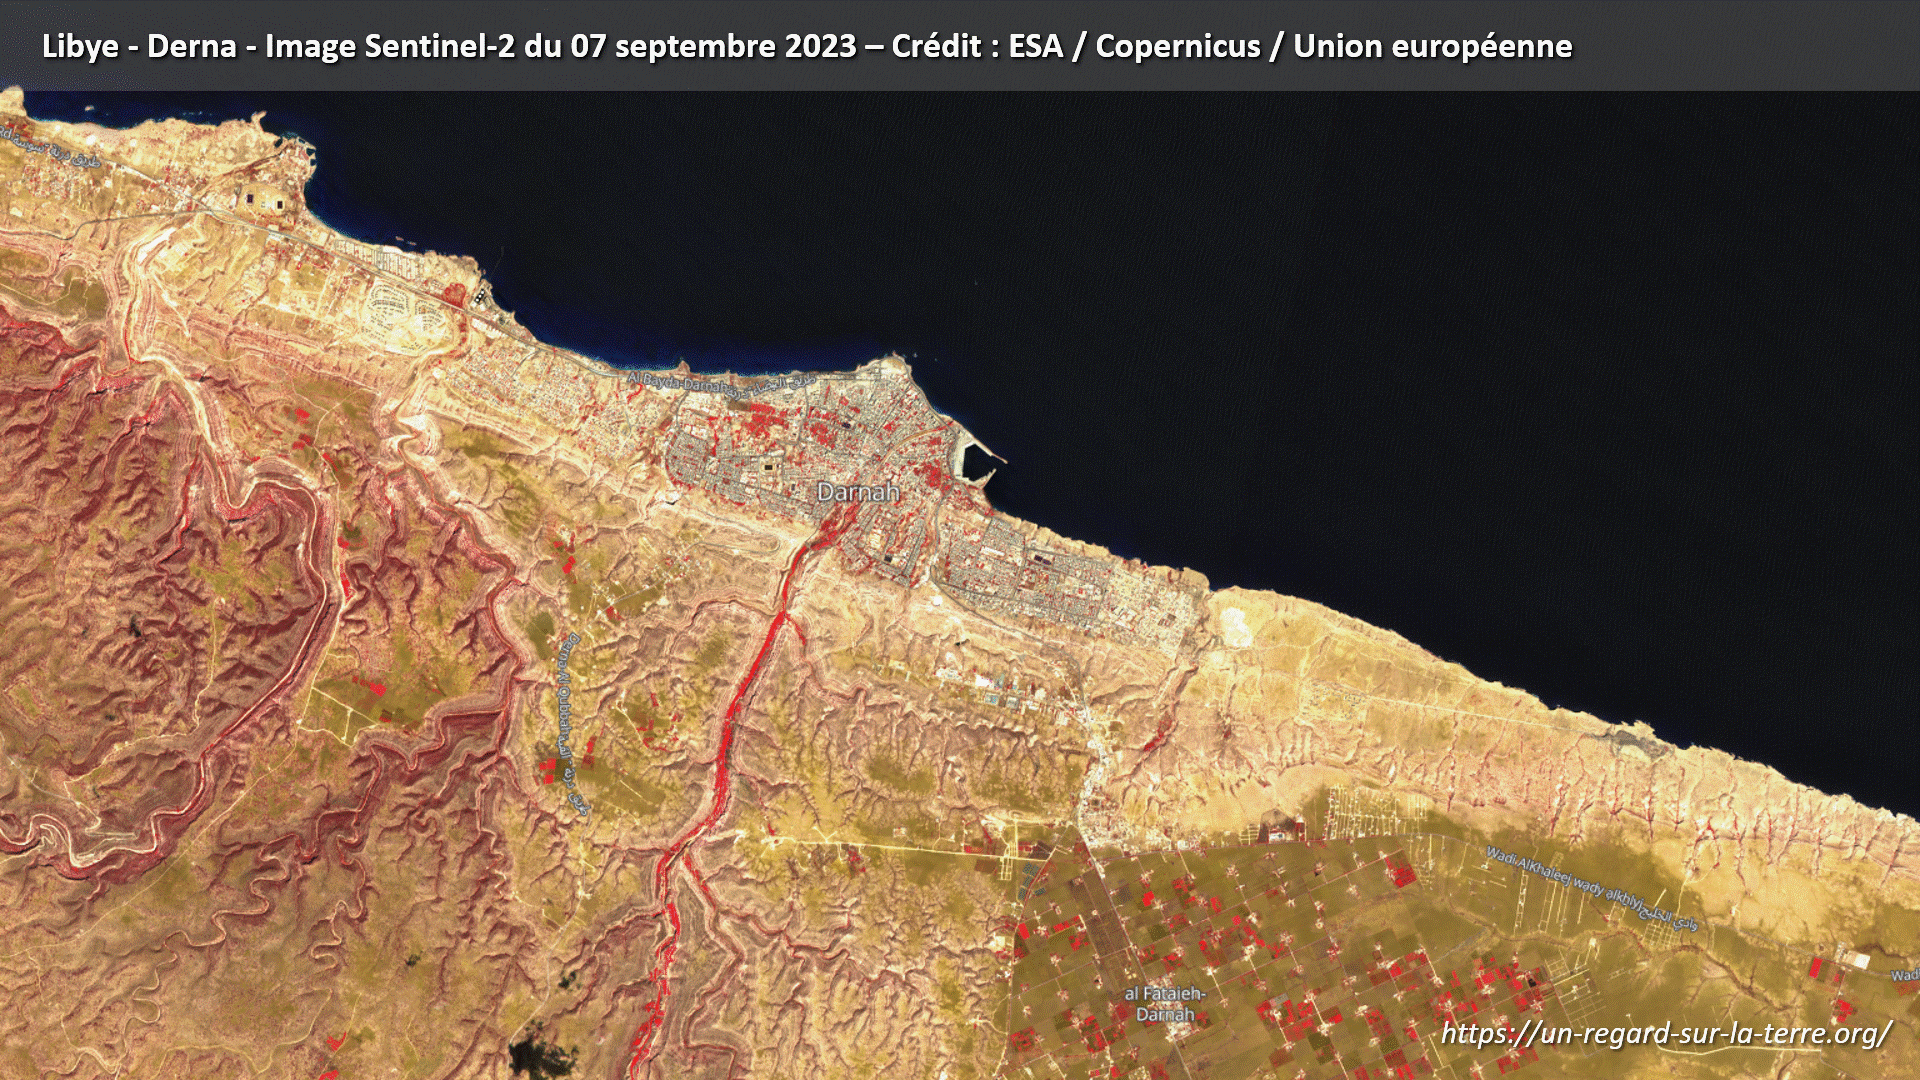 Libye - Derna - Darnah - inondations - floods - satellite - Sentinel-2 - Copernicus - Septembre 2023 - rupture barrage - Dam - dégâts - damages